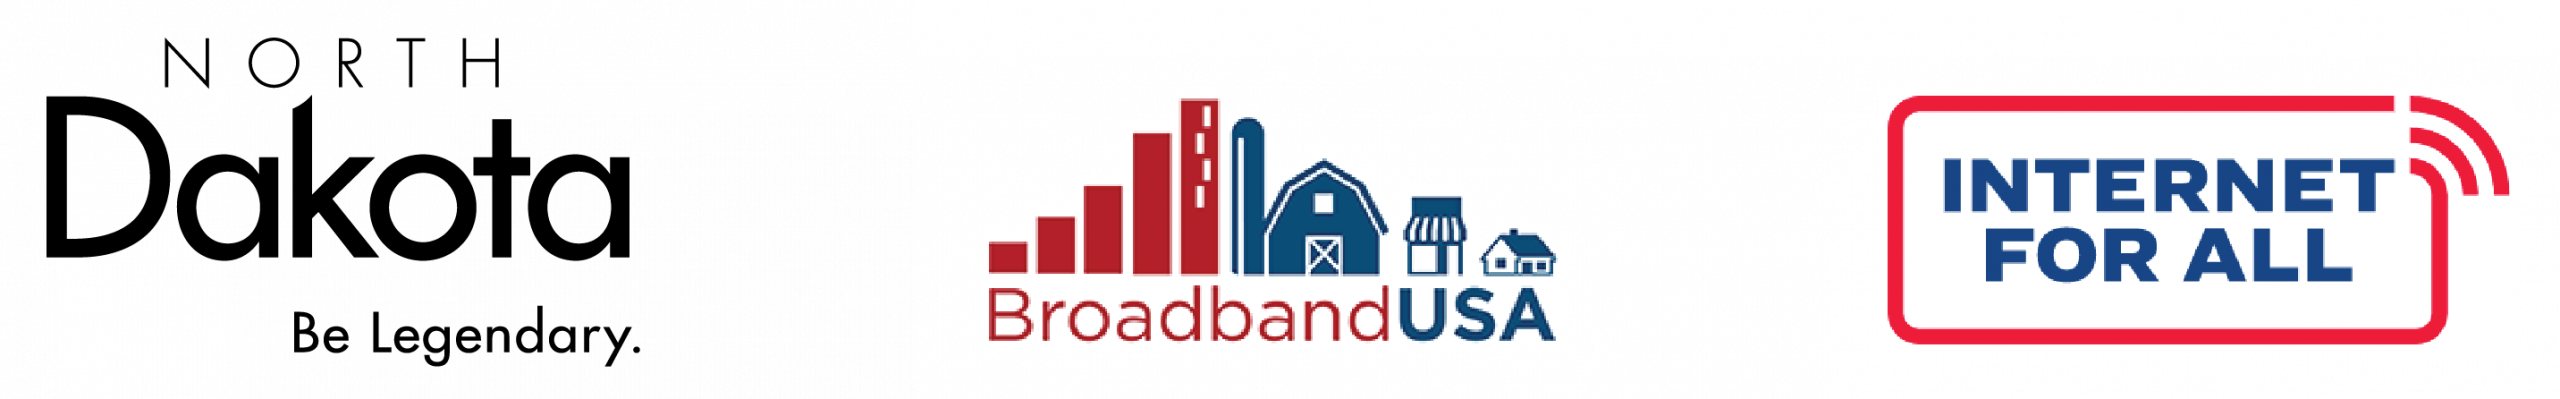 North Dakota be legendary logo, broadband USA logo, Internet for all logo